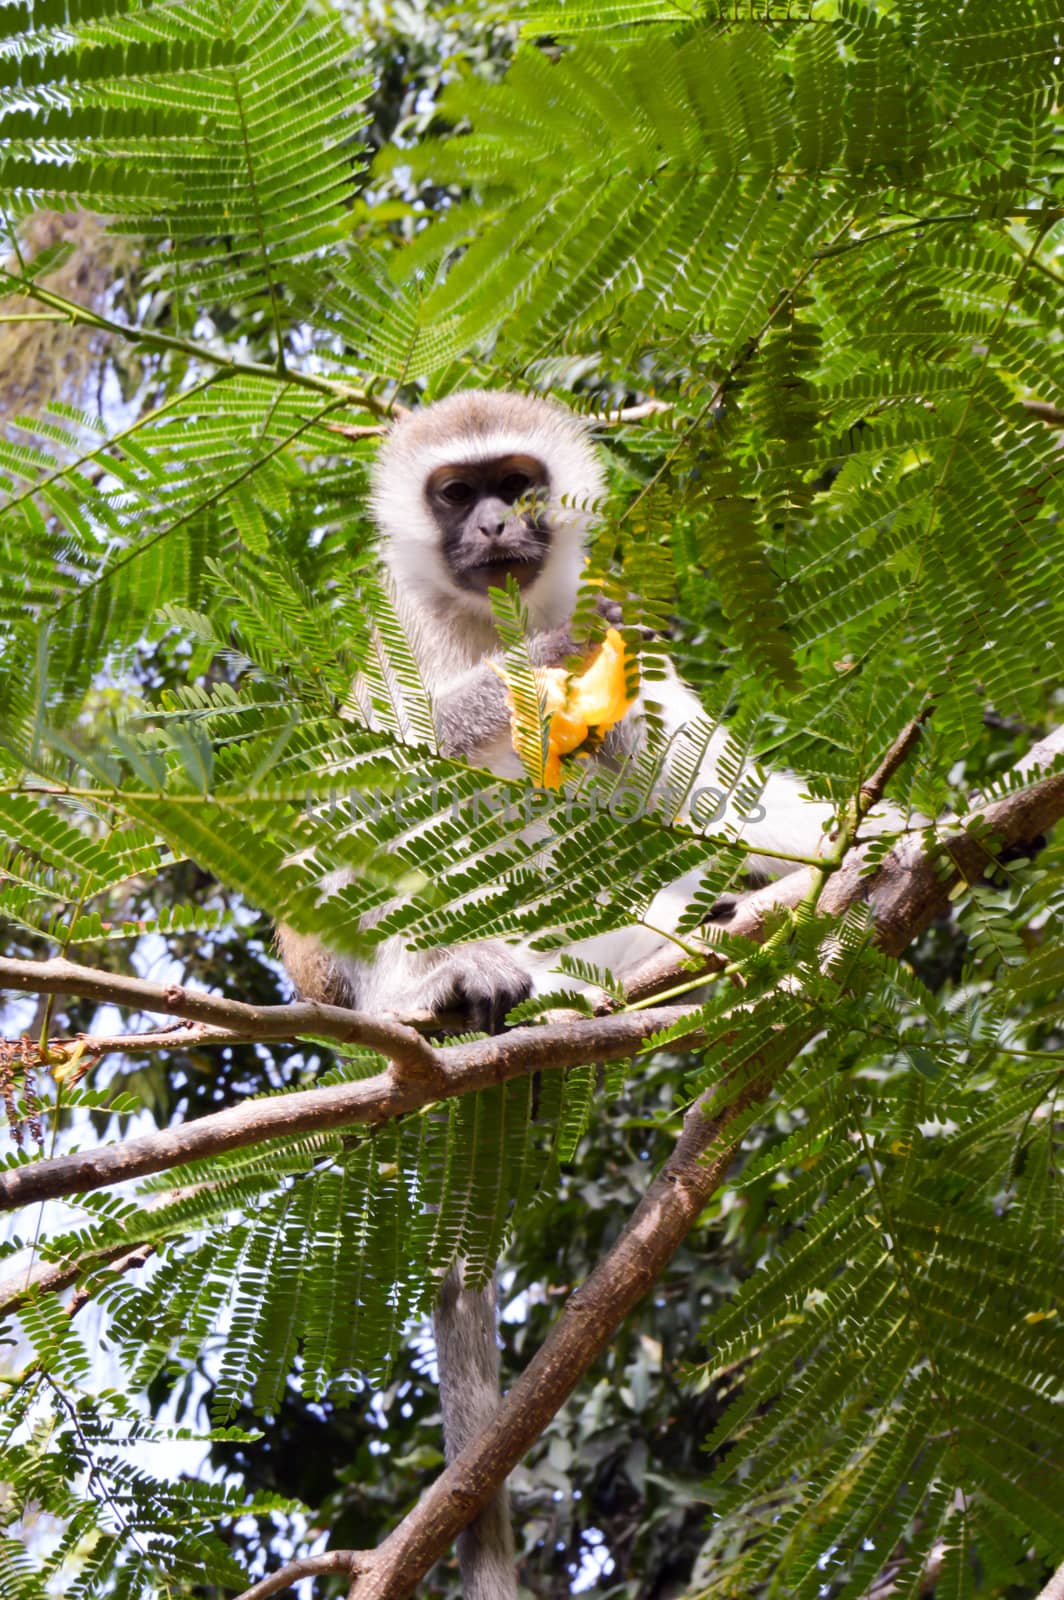 Monkey vervet on a tree eating a mango in a park in Mombasa, Kenya